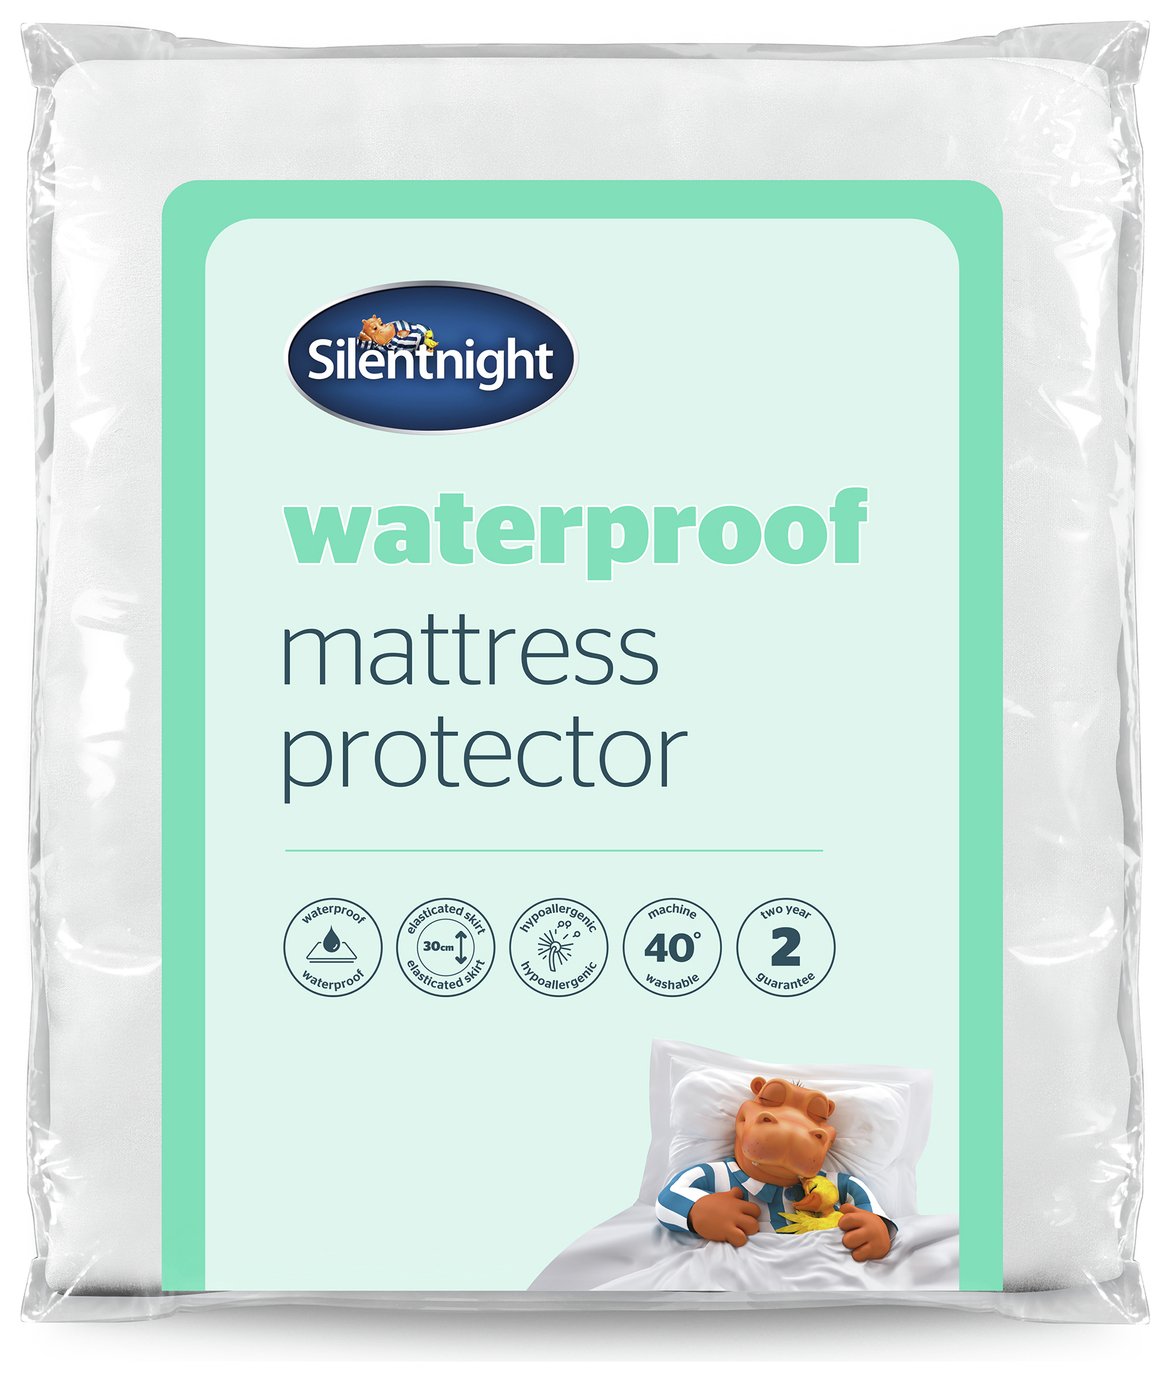 Silentnight Waterproof Mattress Protector - Kingsize